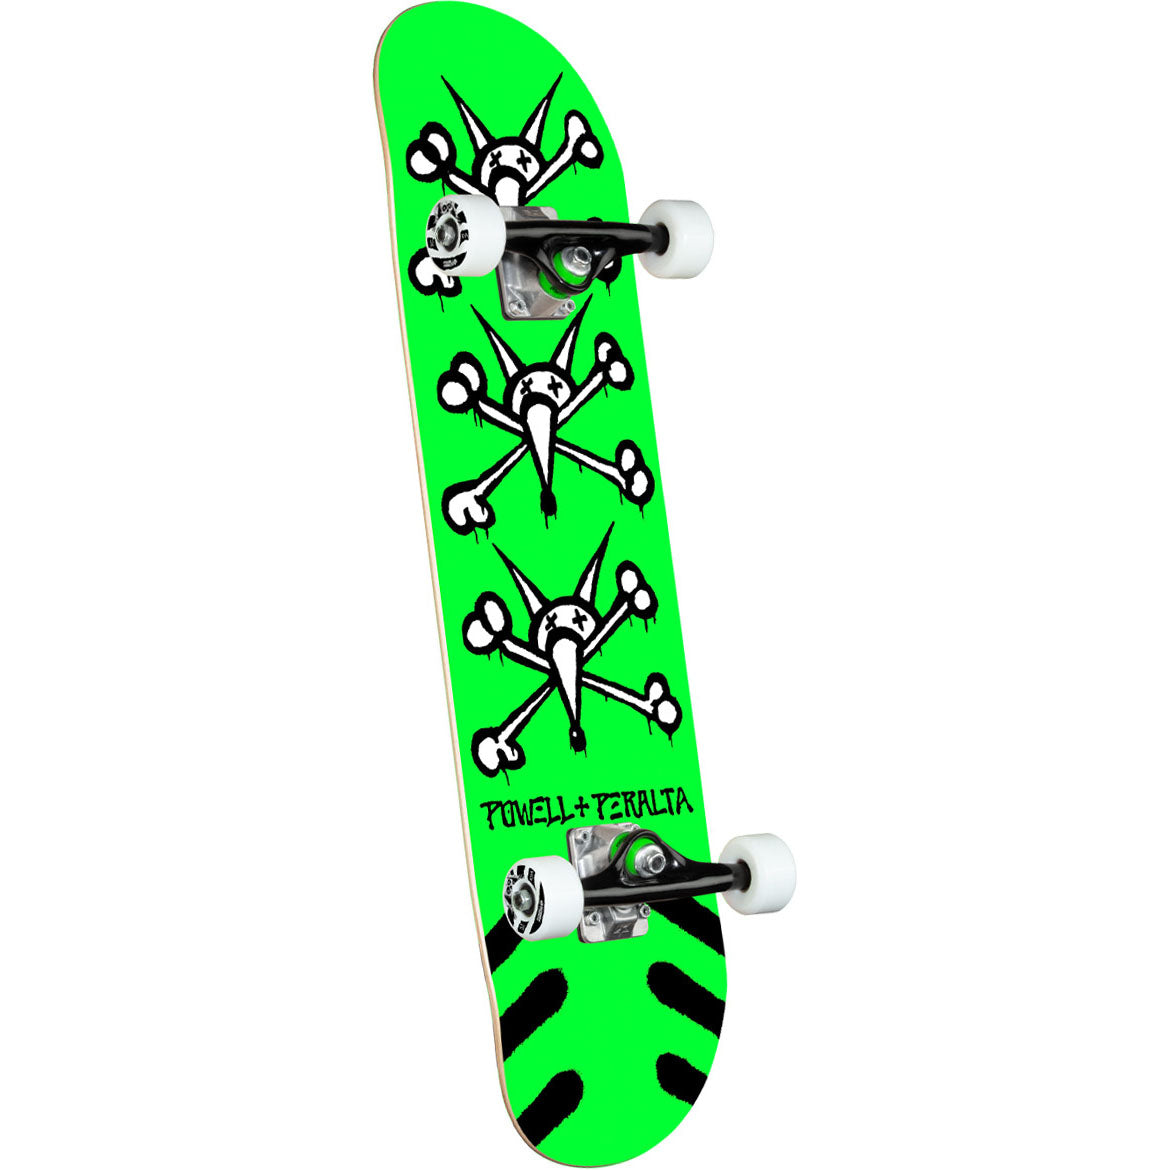 Powell Peralta Vato Rats Green Birch 7.0 x 28 Complete Skateboard